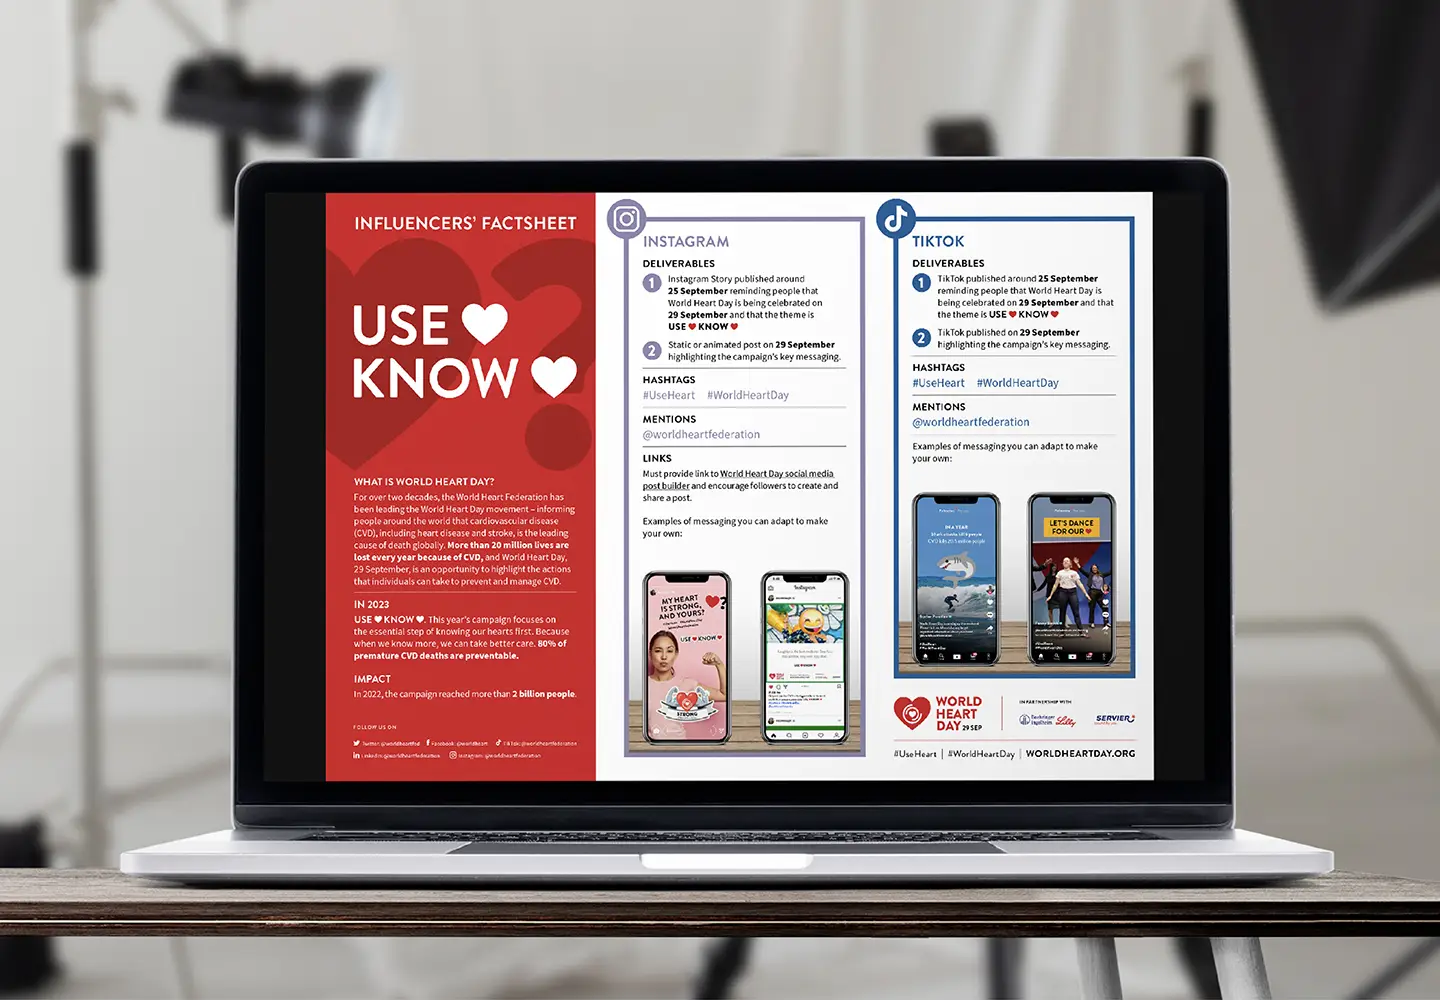 Apple Macbook showing the World Heart Day influencer factsheet